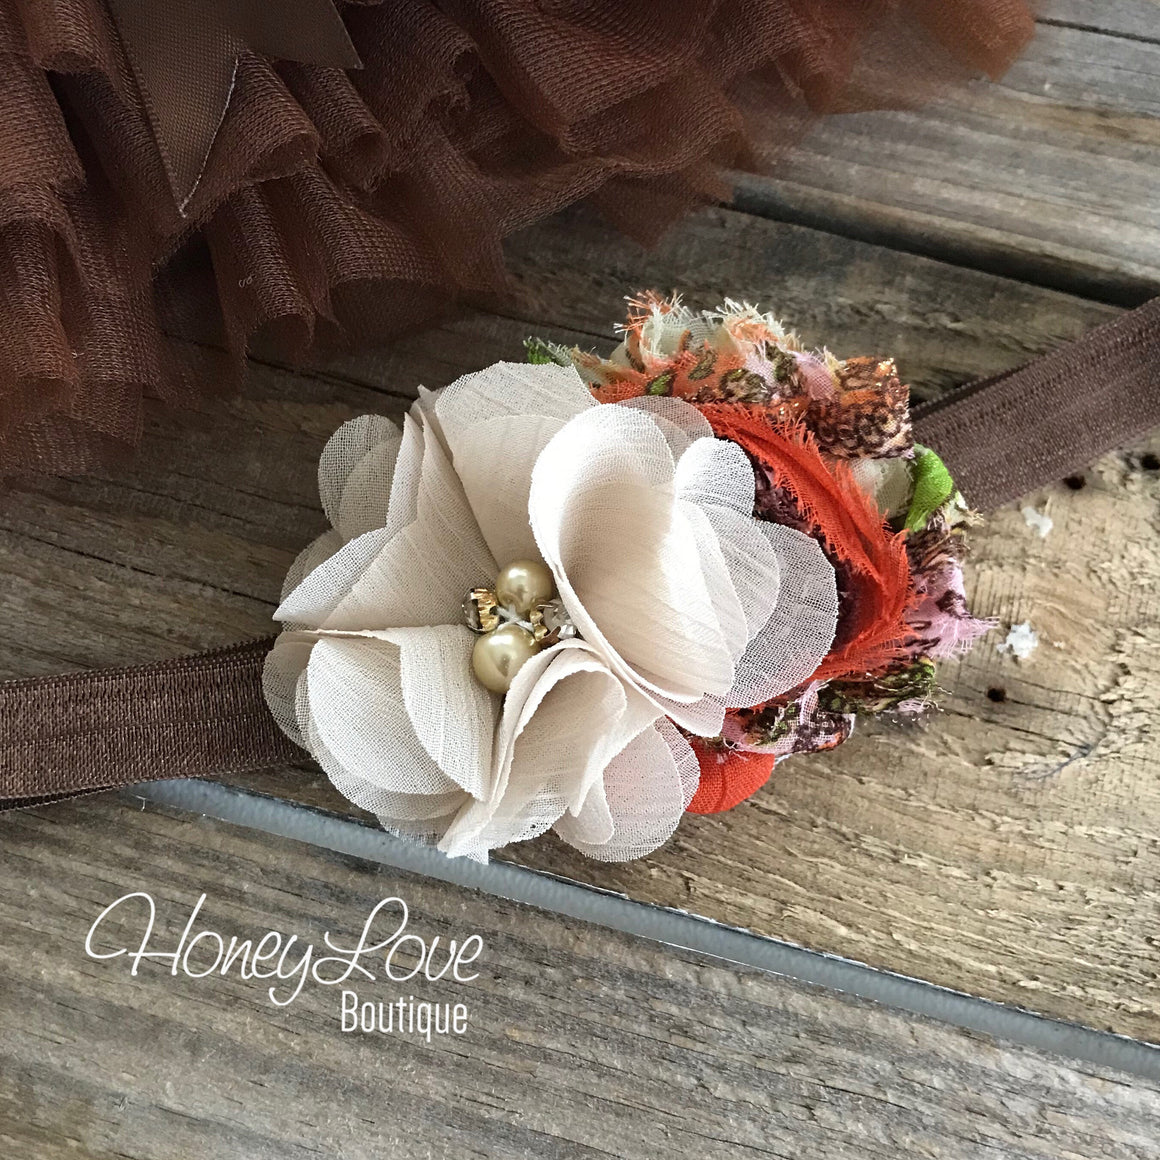 Brown tutu skirt bloomers - embellished tutu skirt bloomers and headband - HoneyLoveBoutique